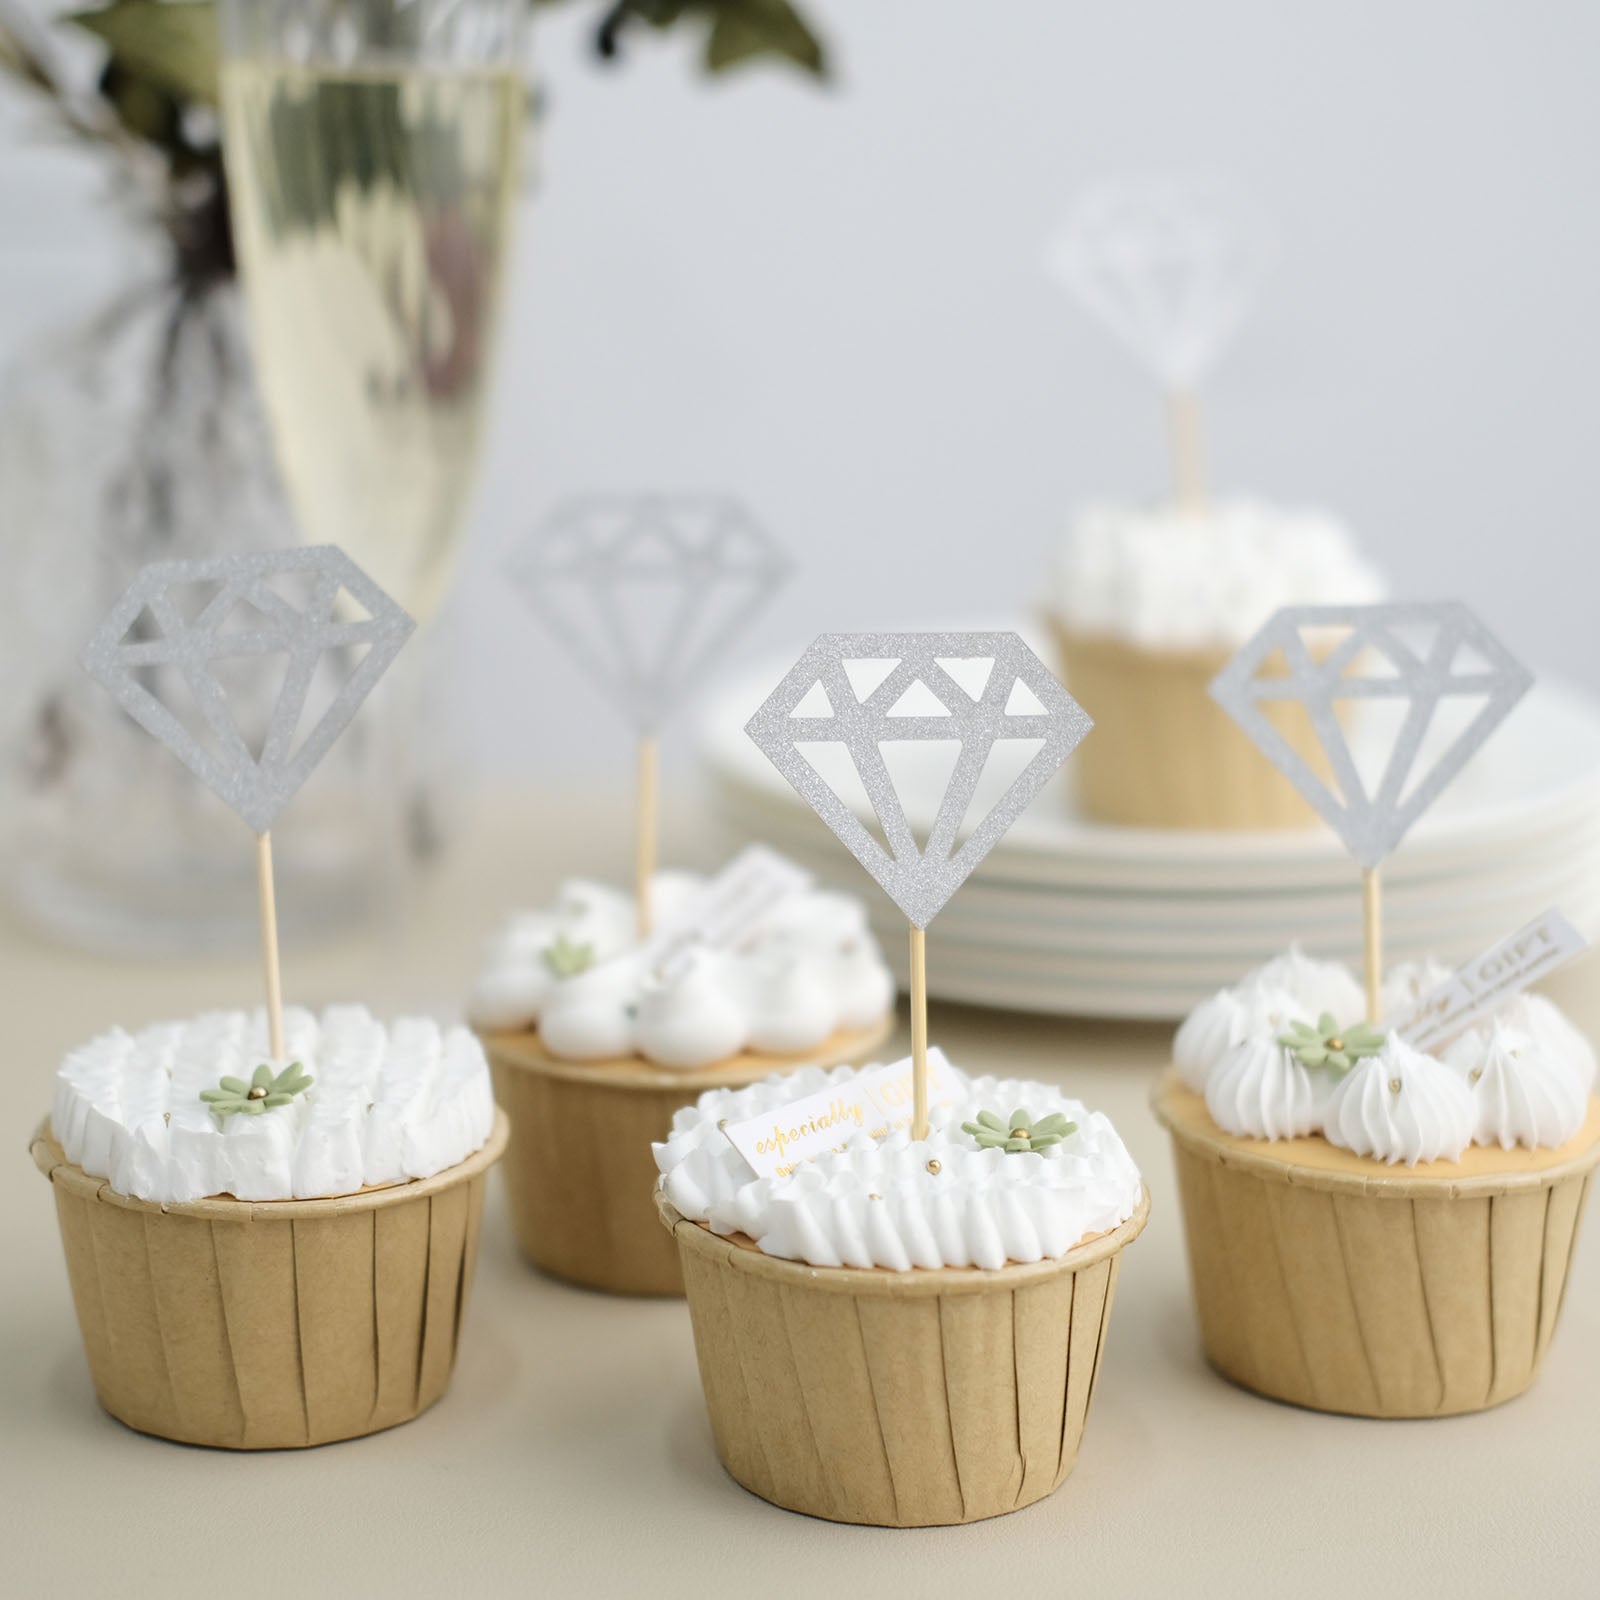 24 Diamond Ring Cupcake Topper Rings – Bling Your Cake